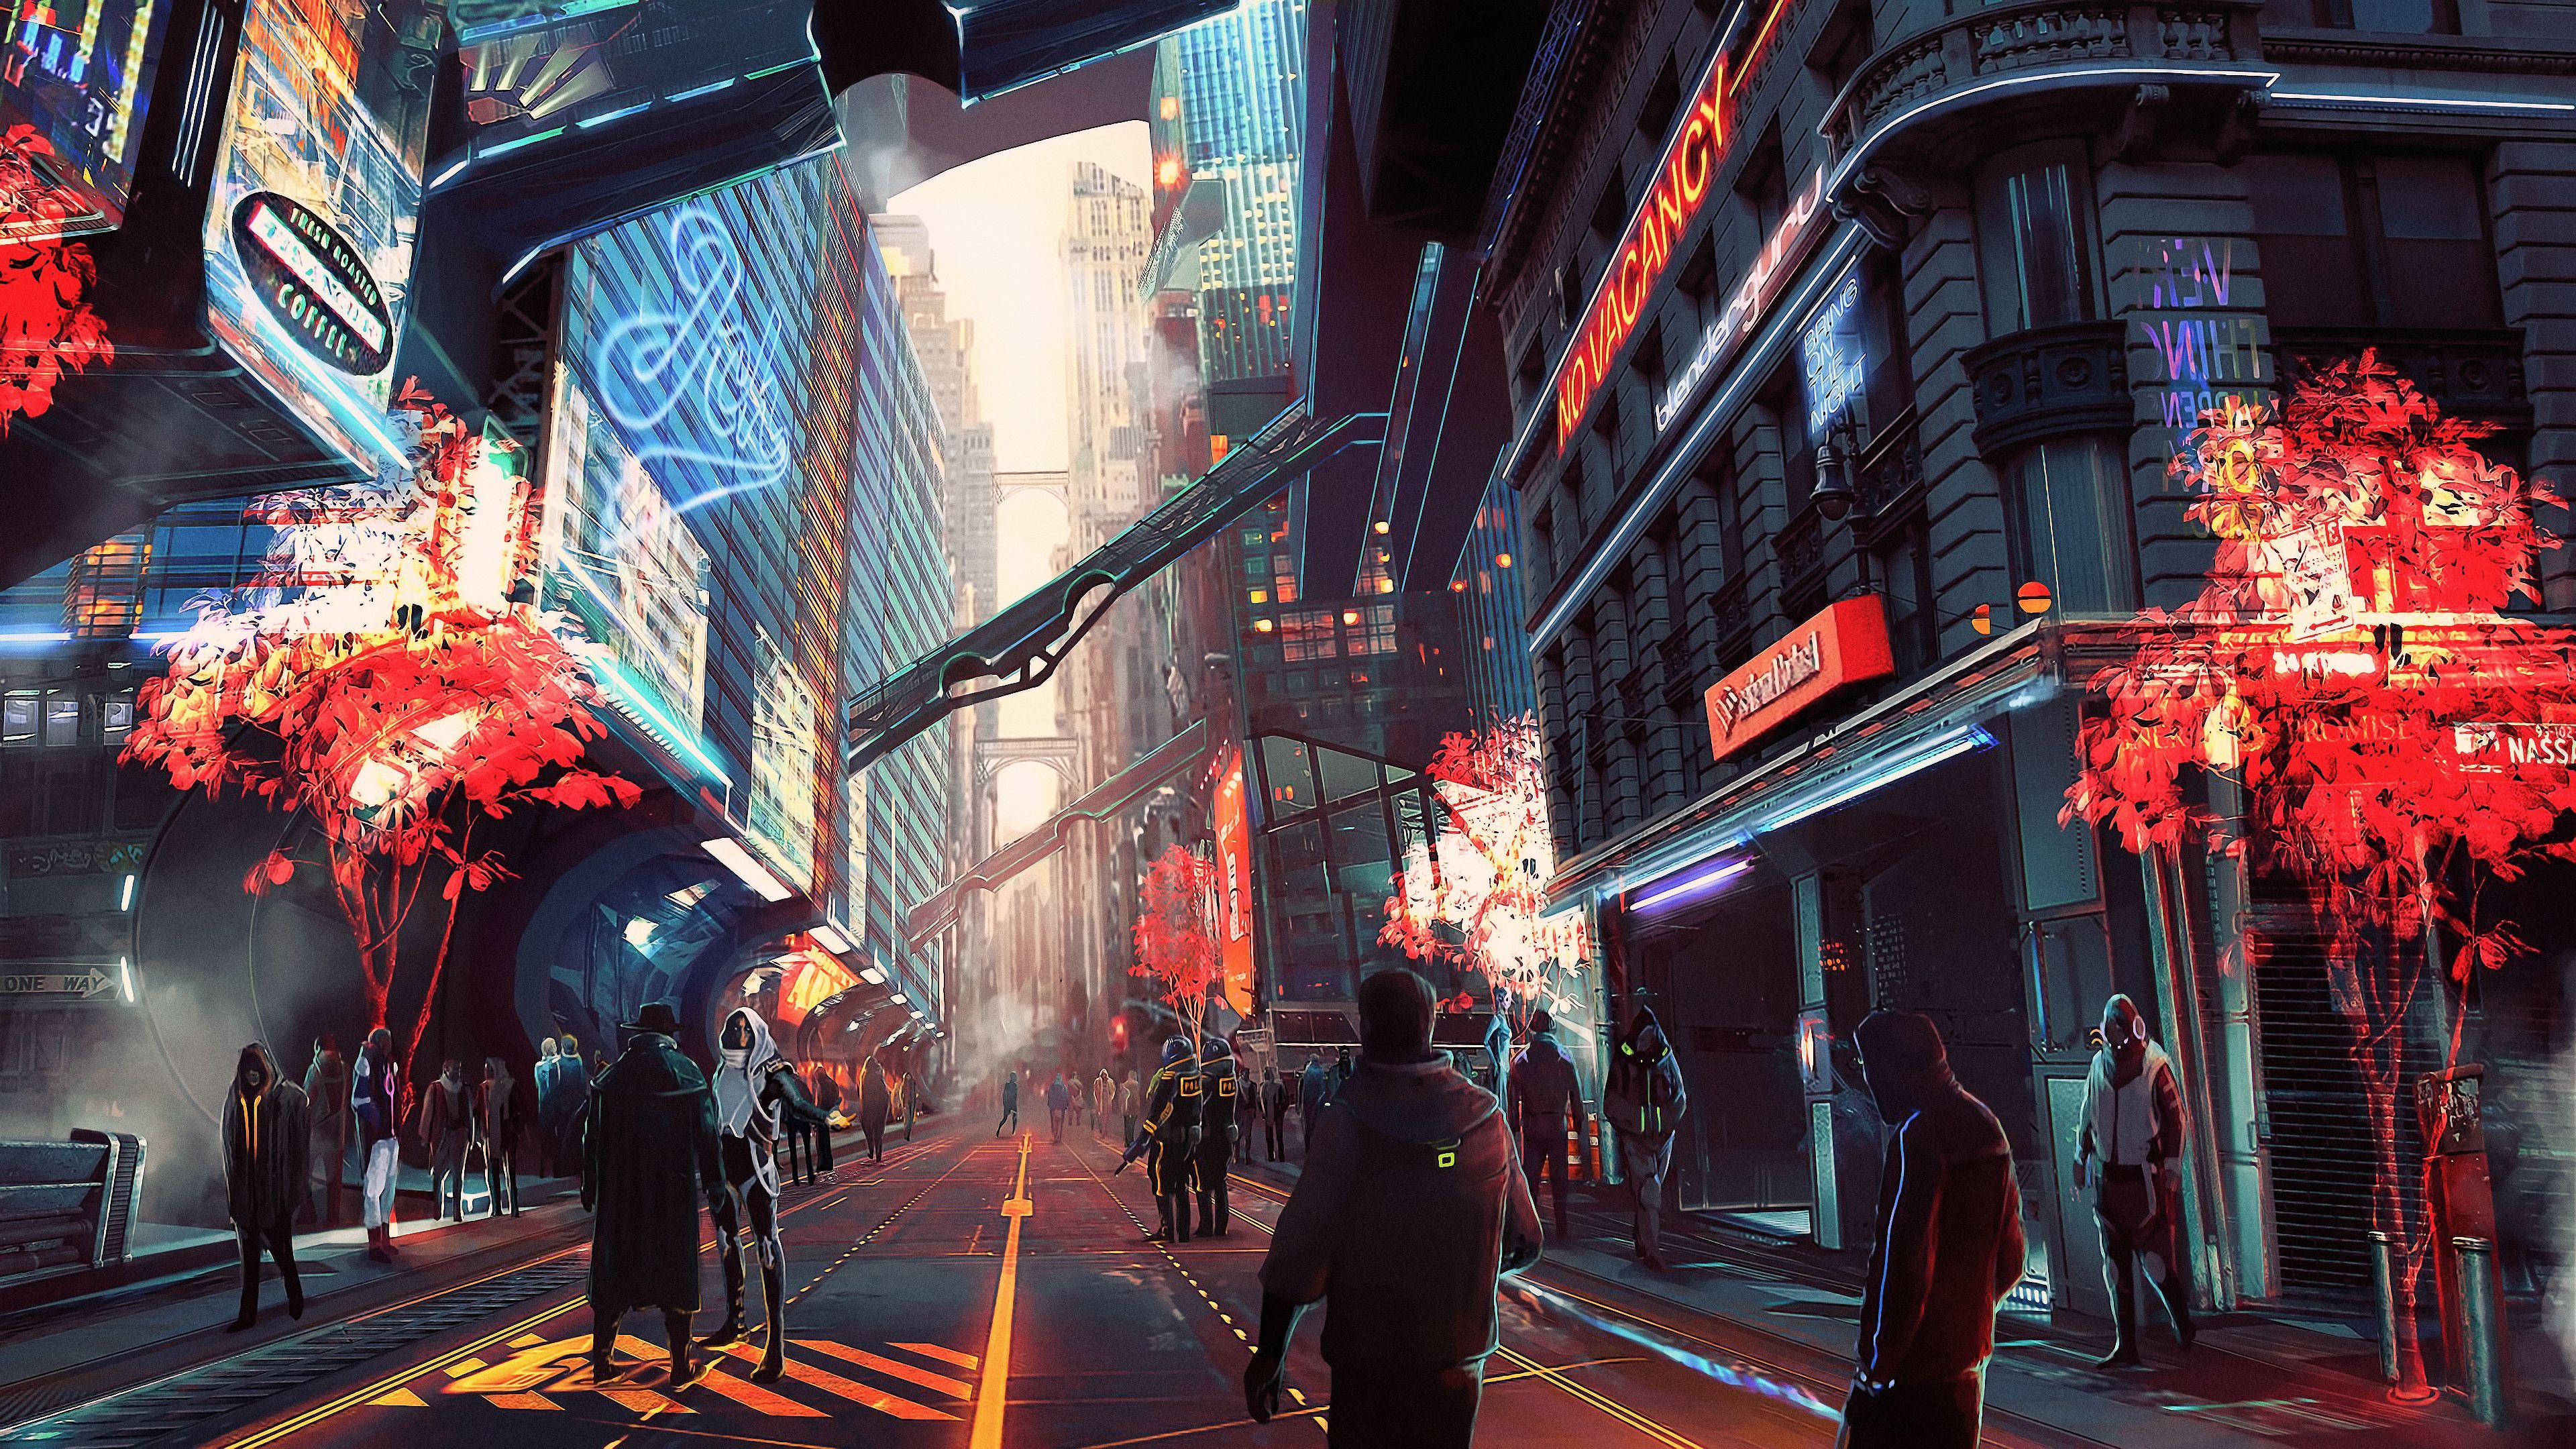 Cyberpunk City Future Digital Art 4k Hd Wallpaper, Digital Art Wallpaper, Cyberpunk Wallpaper, City Wallpaper, A. Cyberpunk City, Sci Fi City, Futuristic City